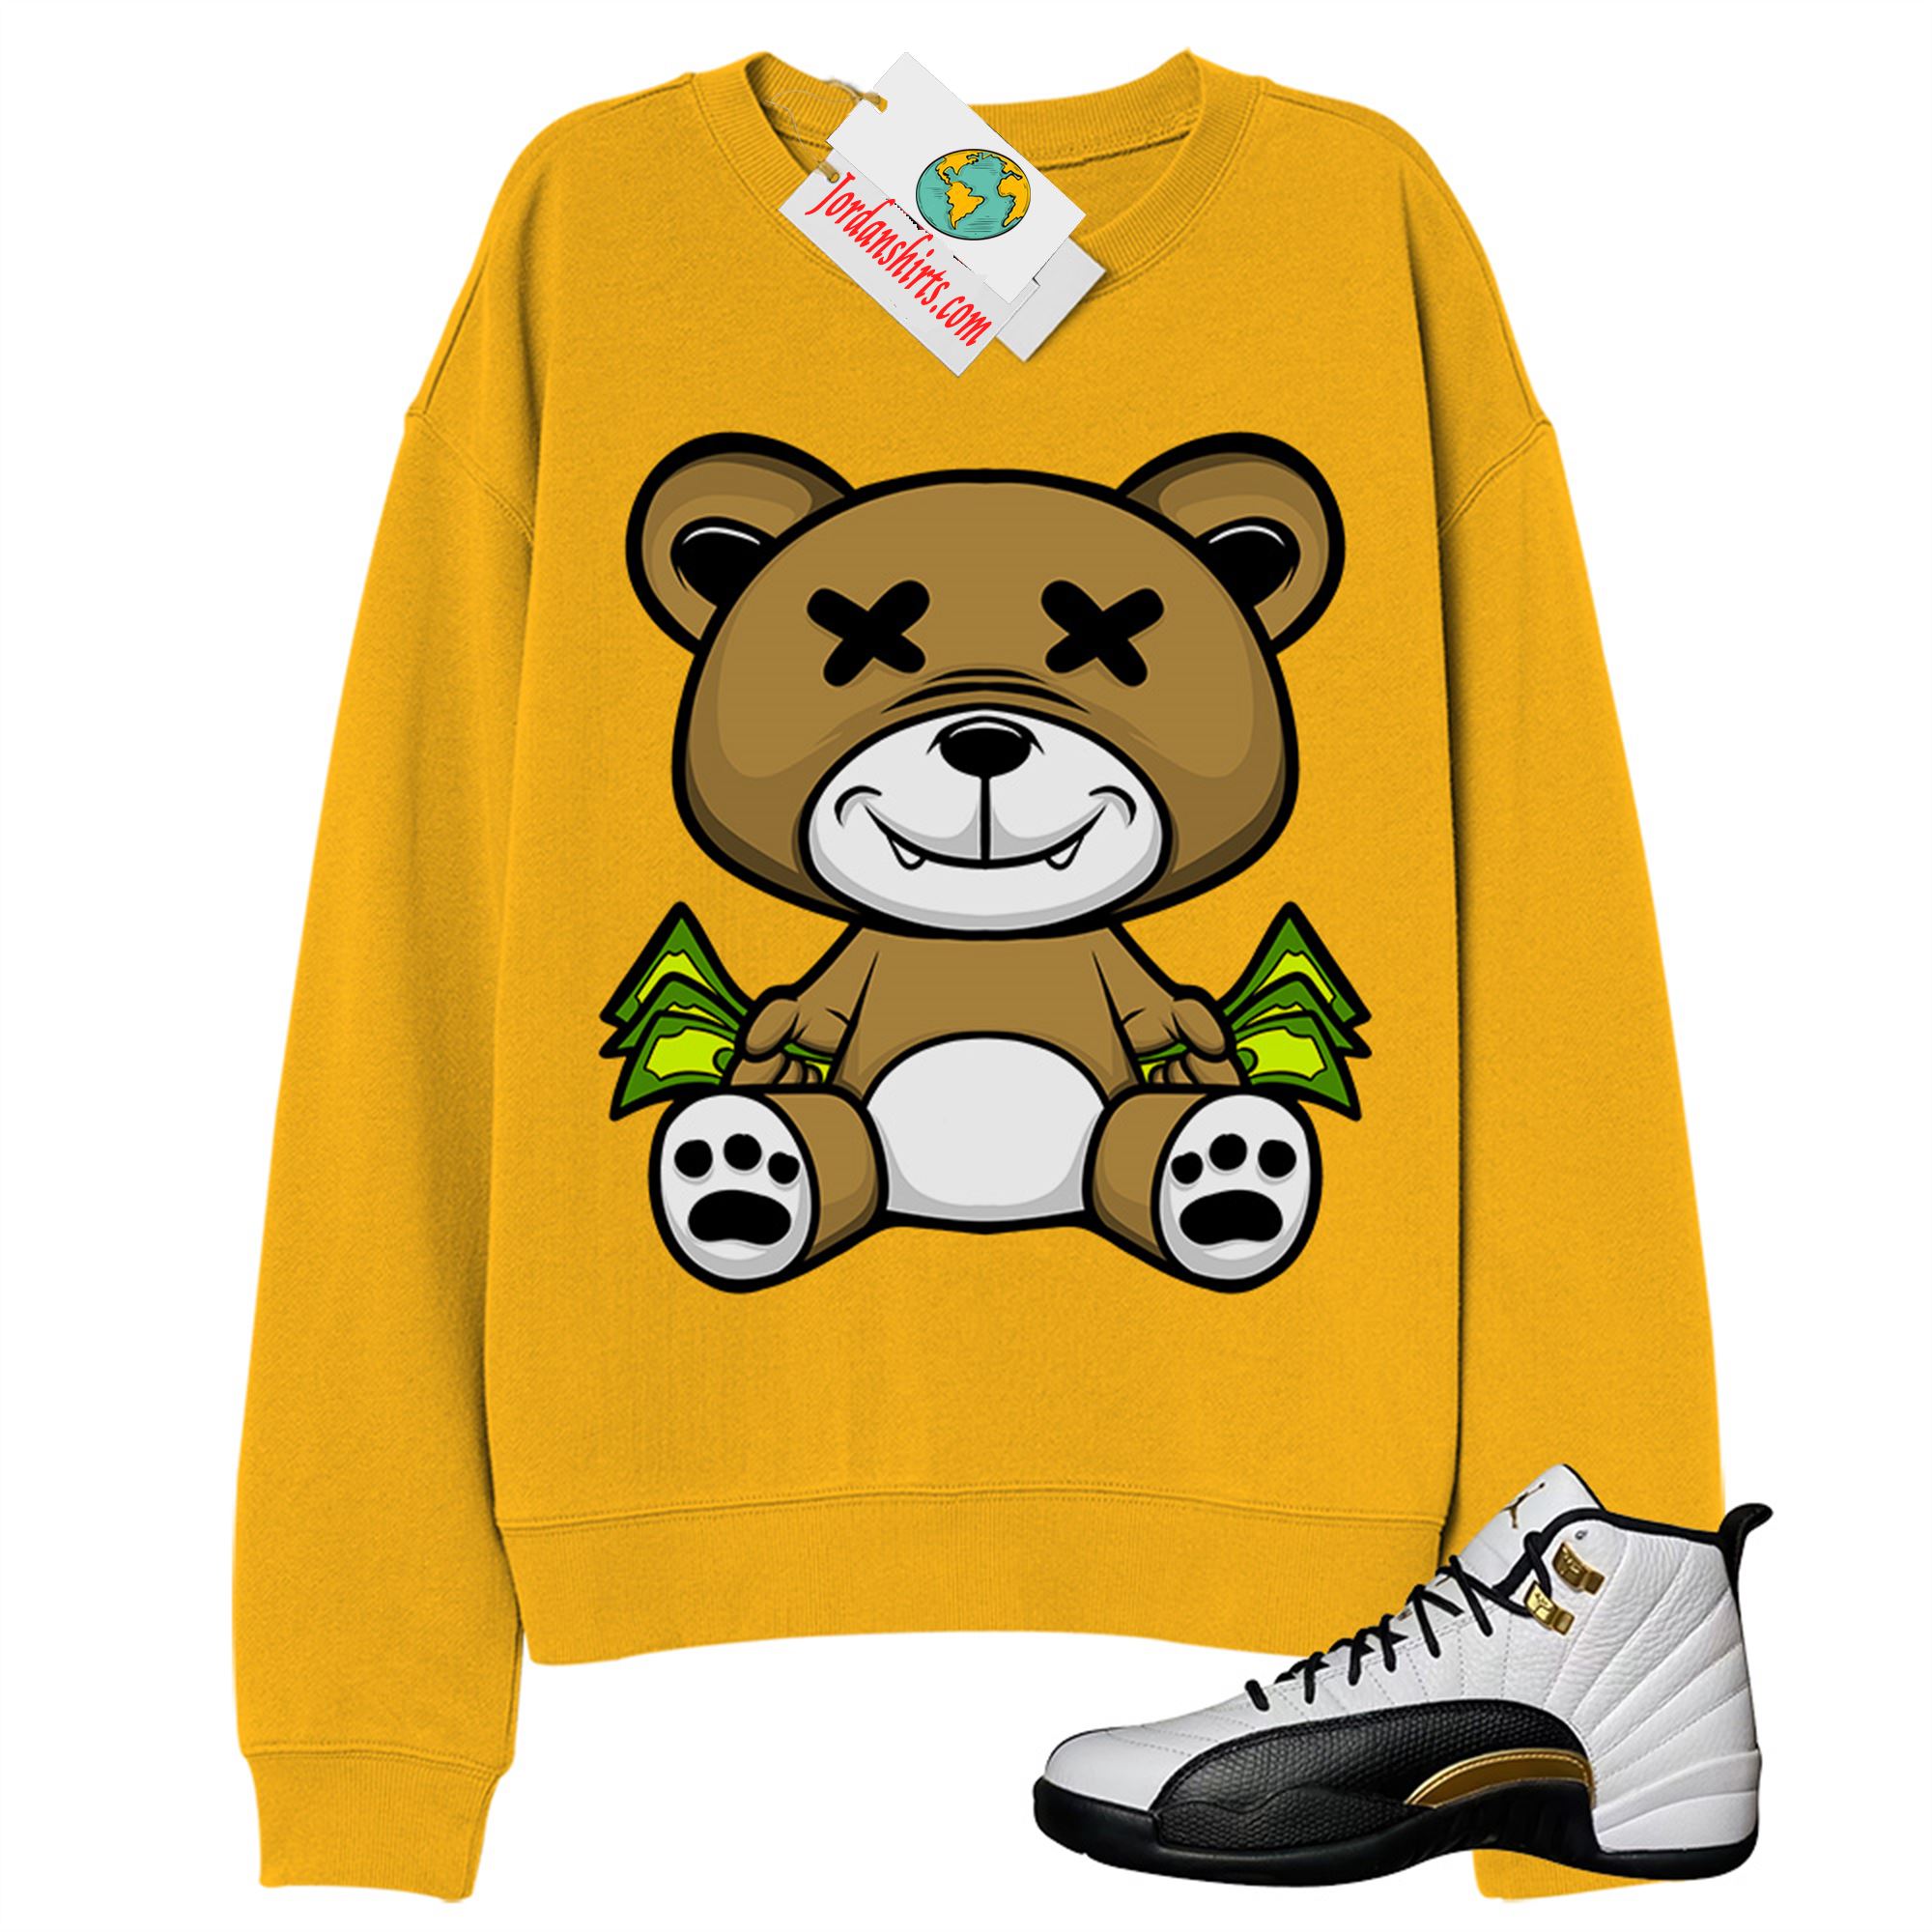 Jordan 12 Sweatshirt, Rich Teddy Bear Gold Sweatshirt Air Jordan 12 Royalty 12s Full Size Up To 5xl